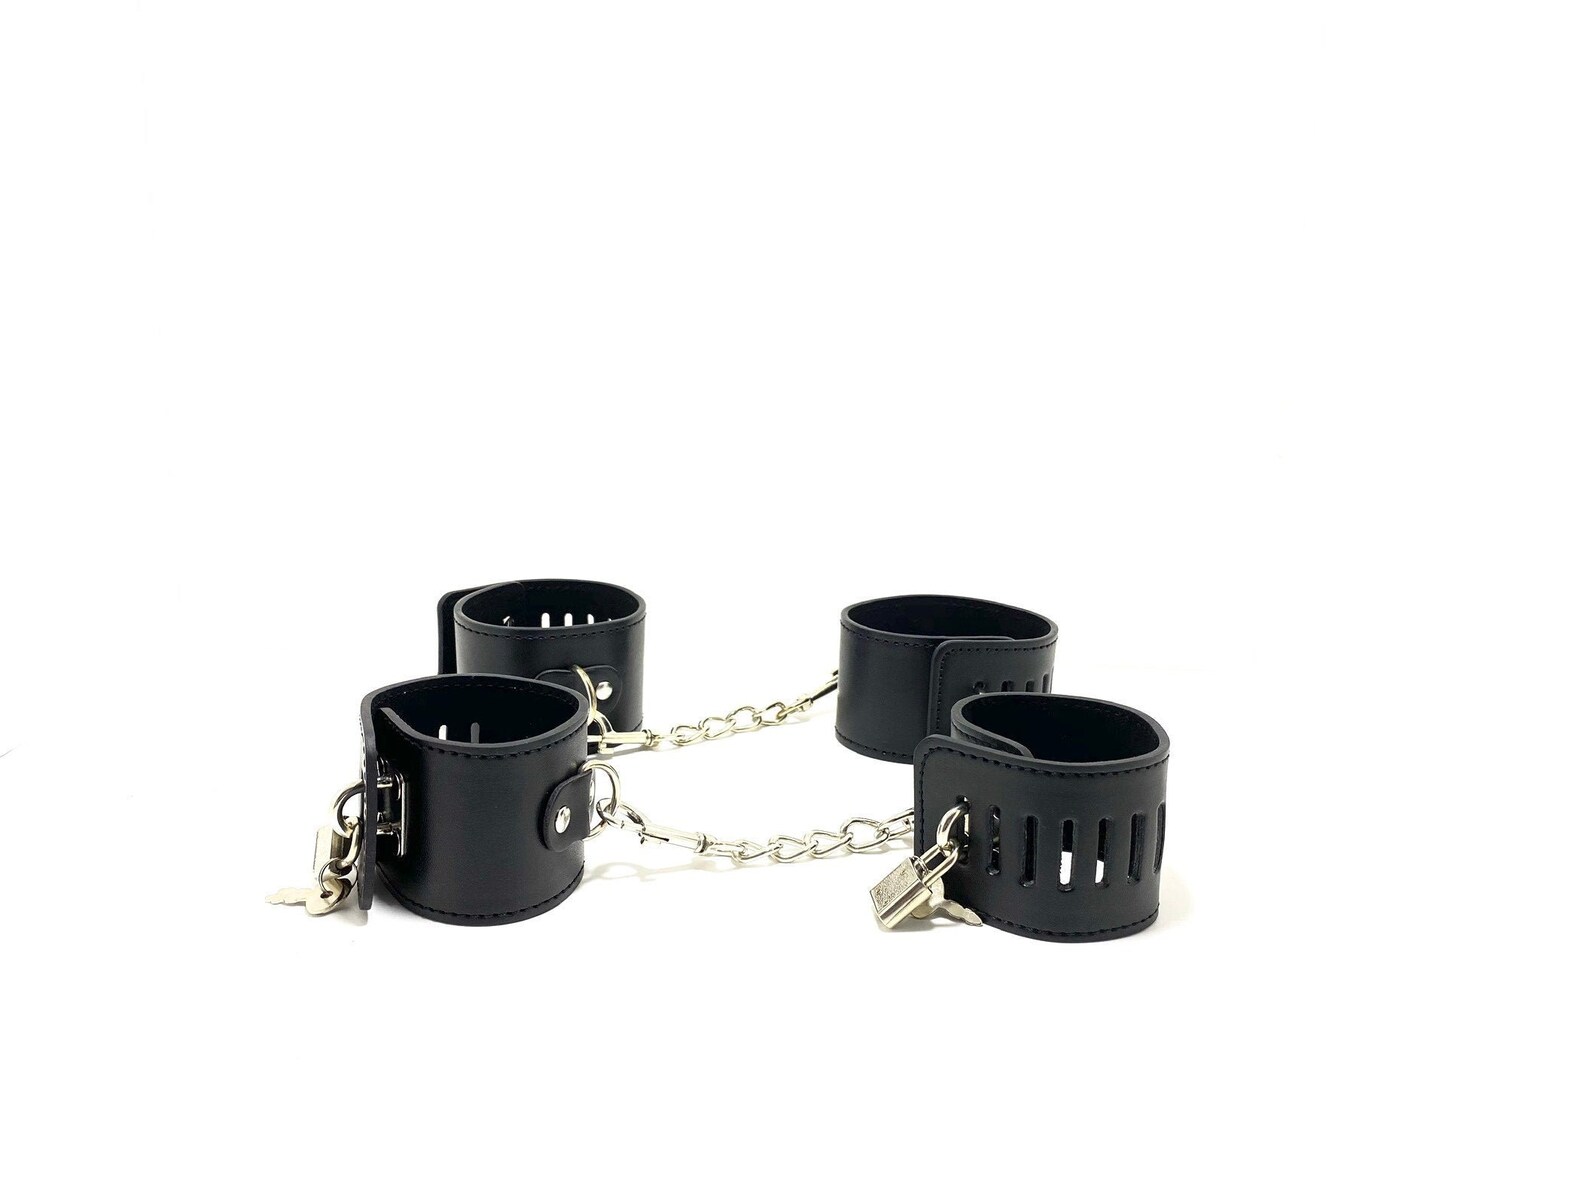 Simple Black restraint set restraint cuffs with lock | Etsy